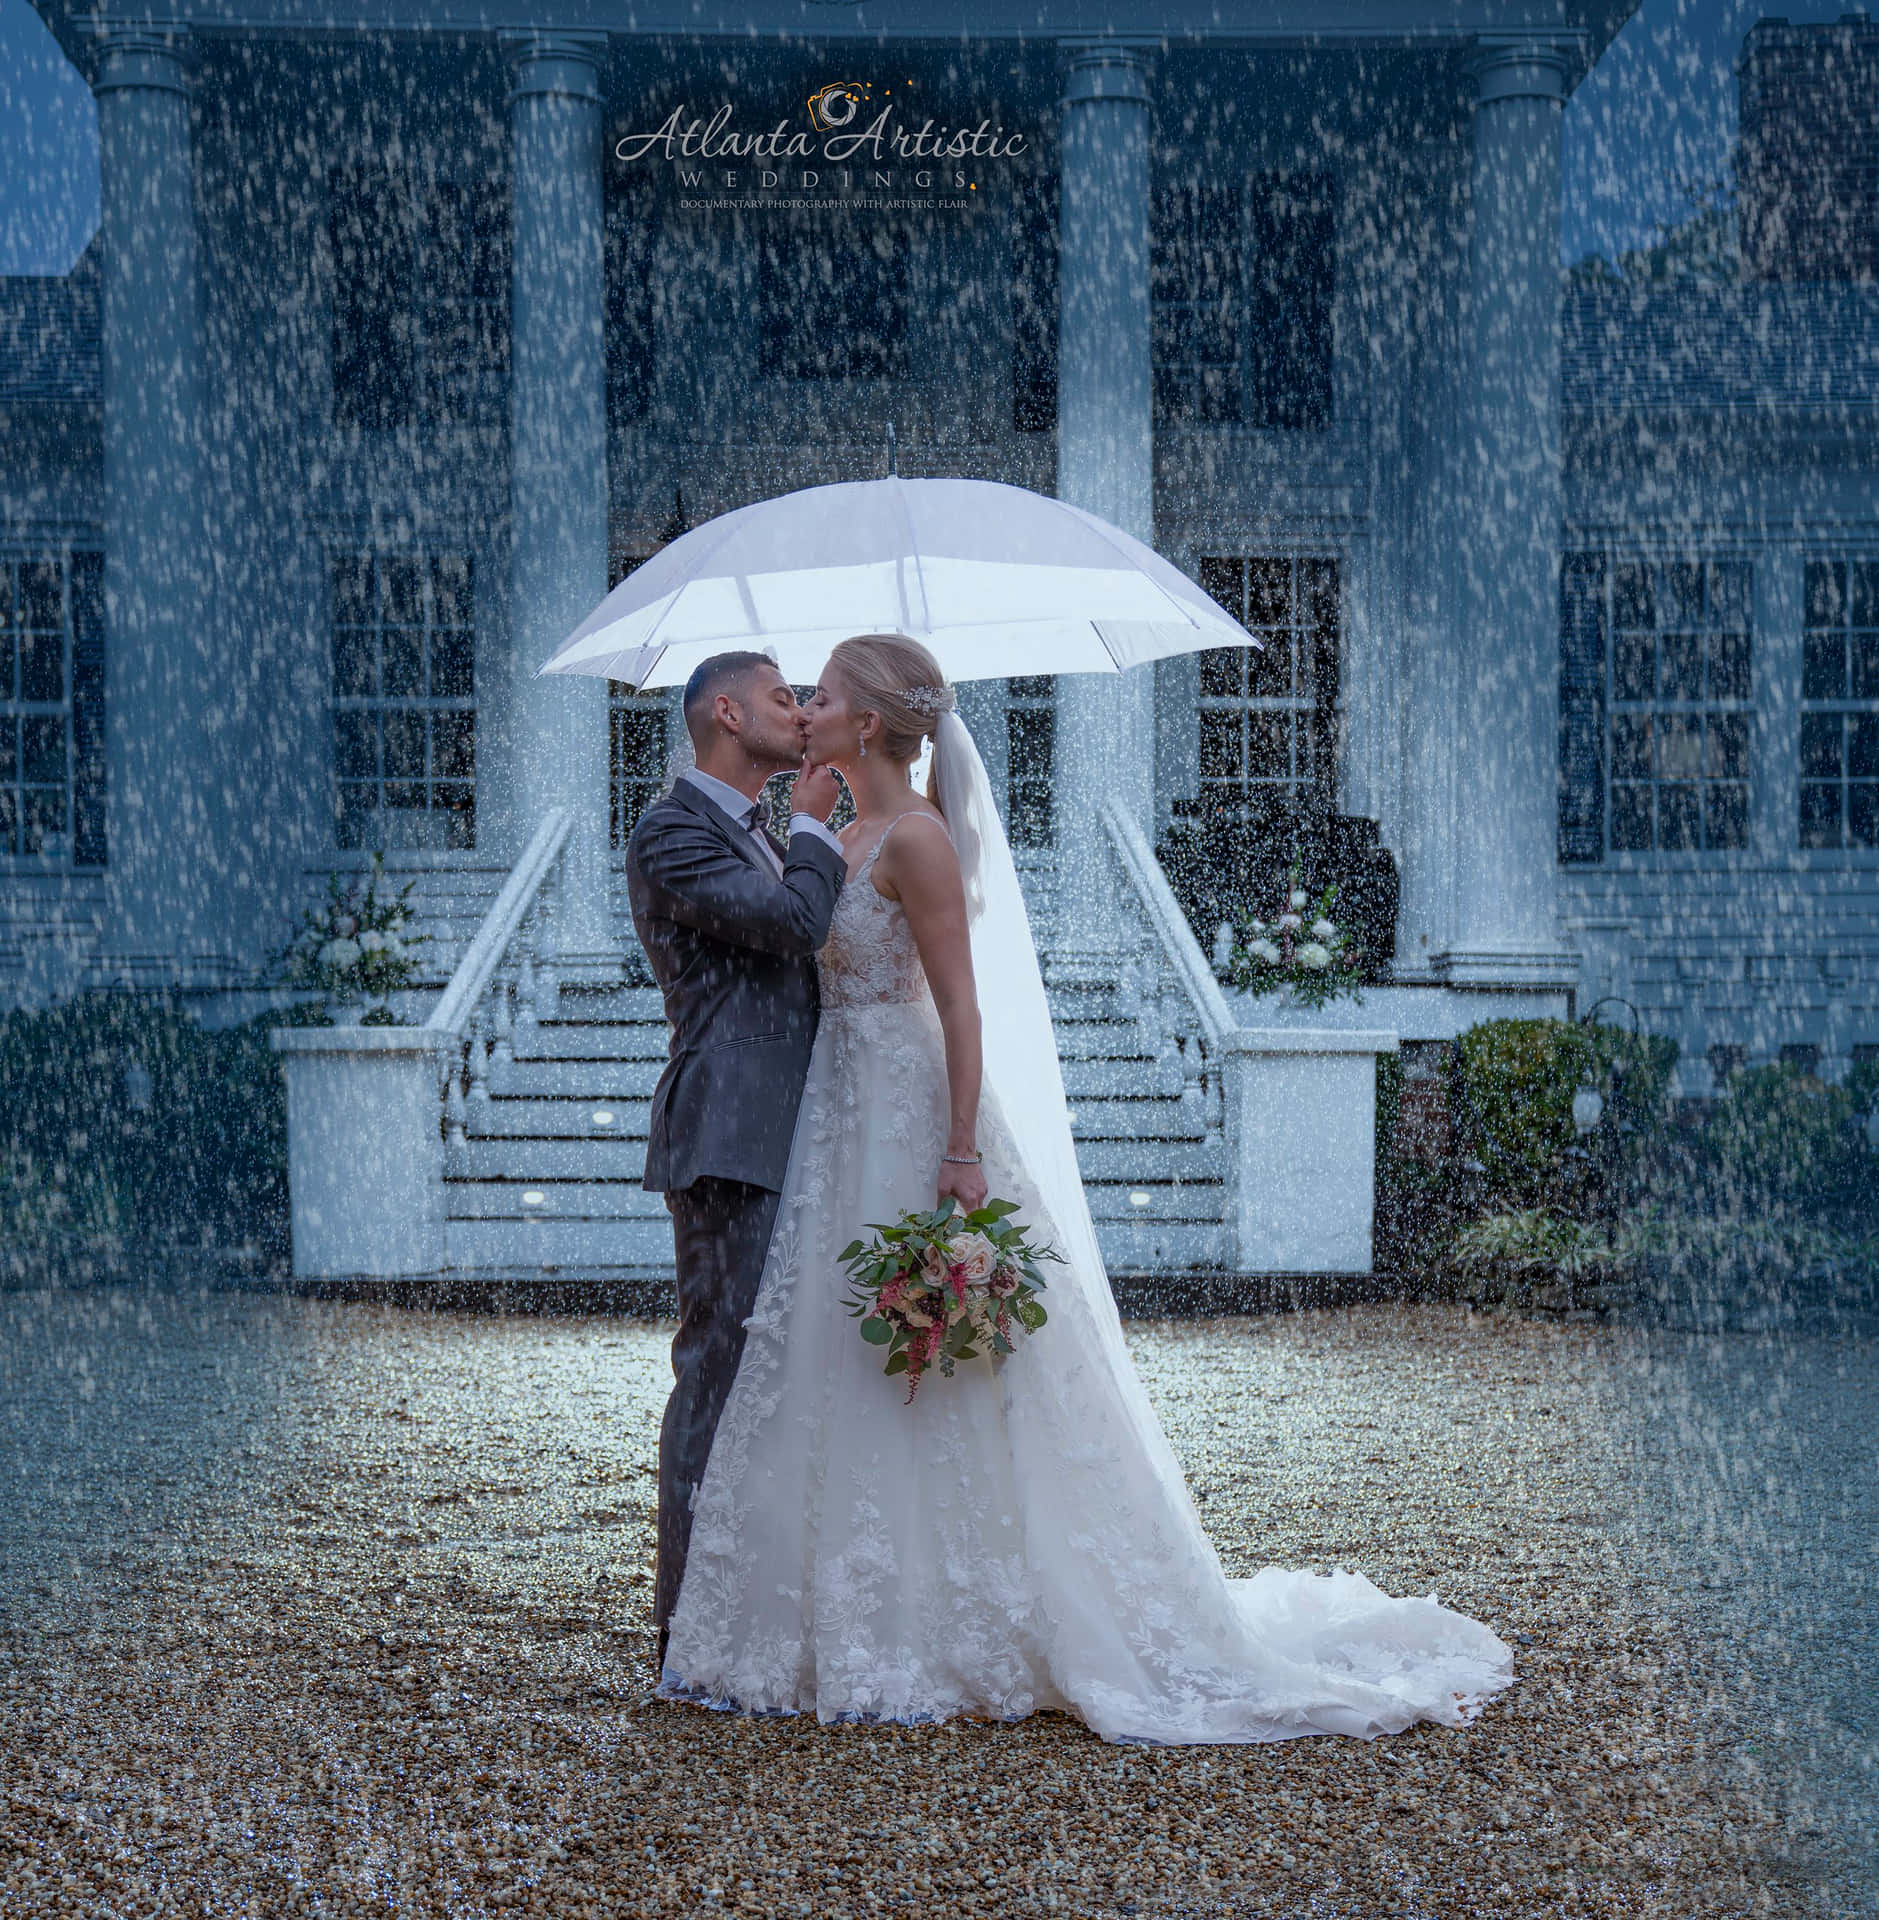 A romantic couple walking in the rain